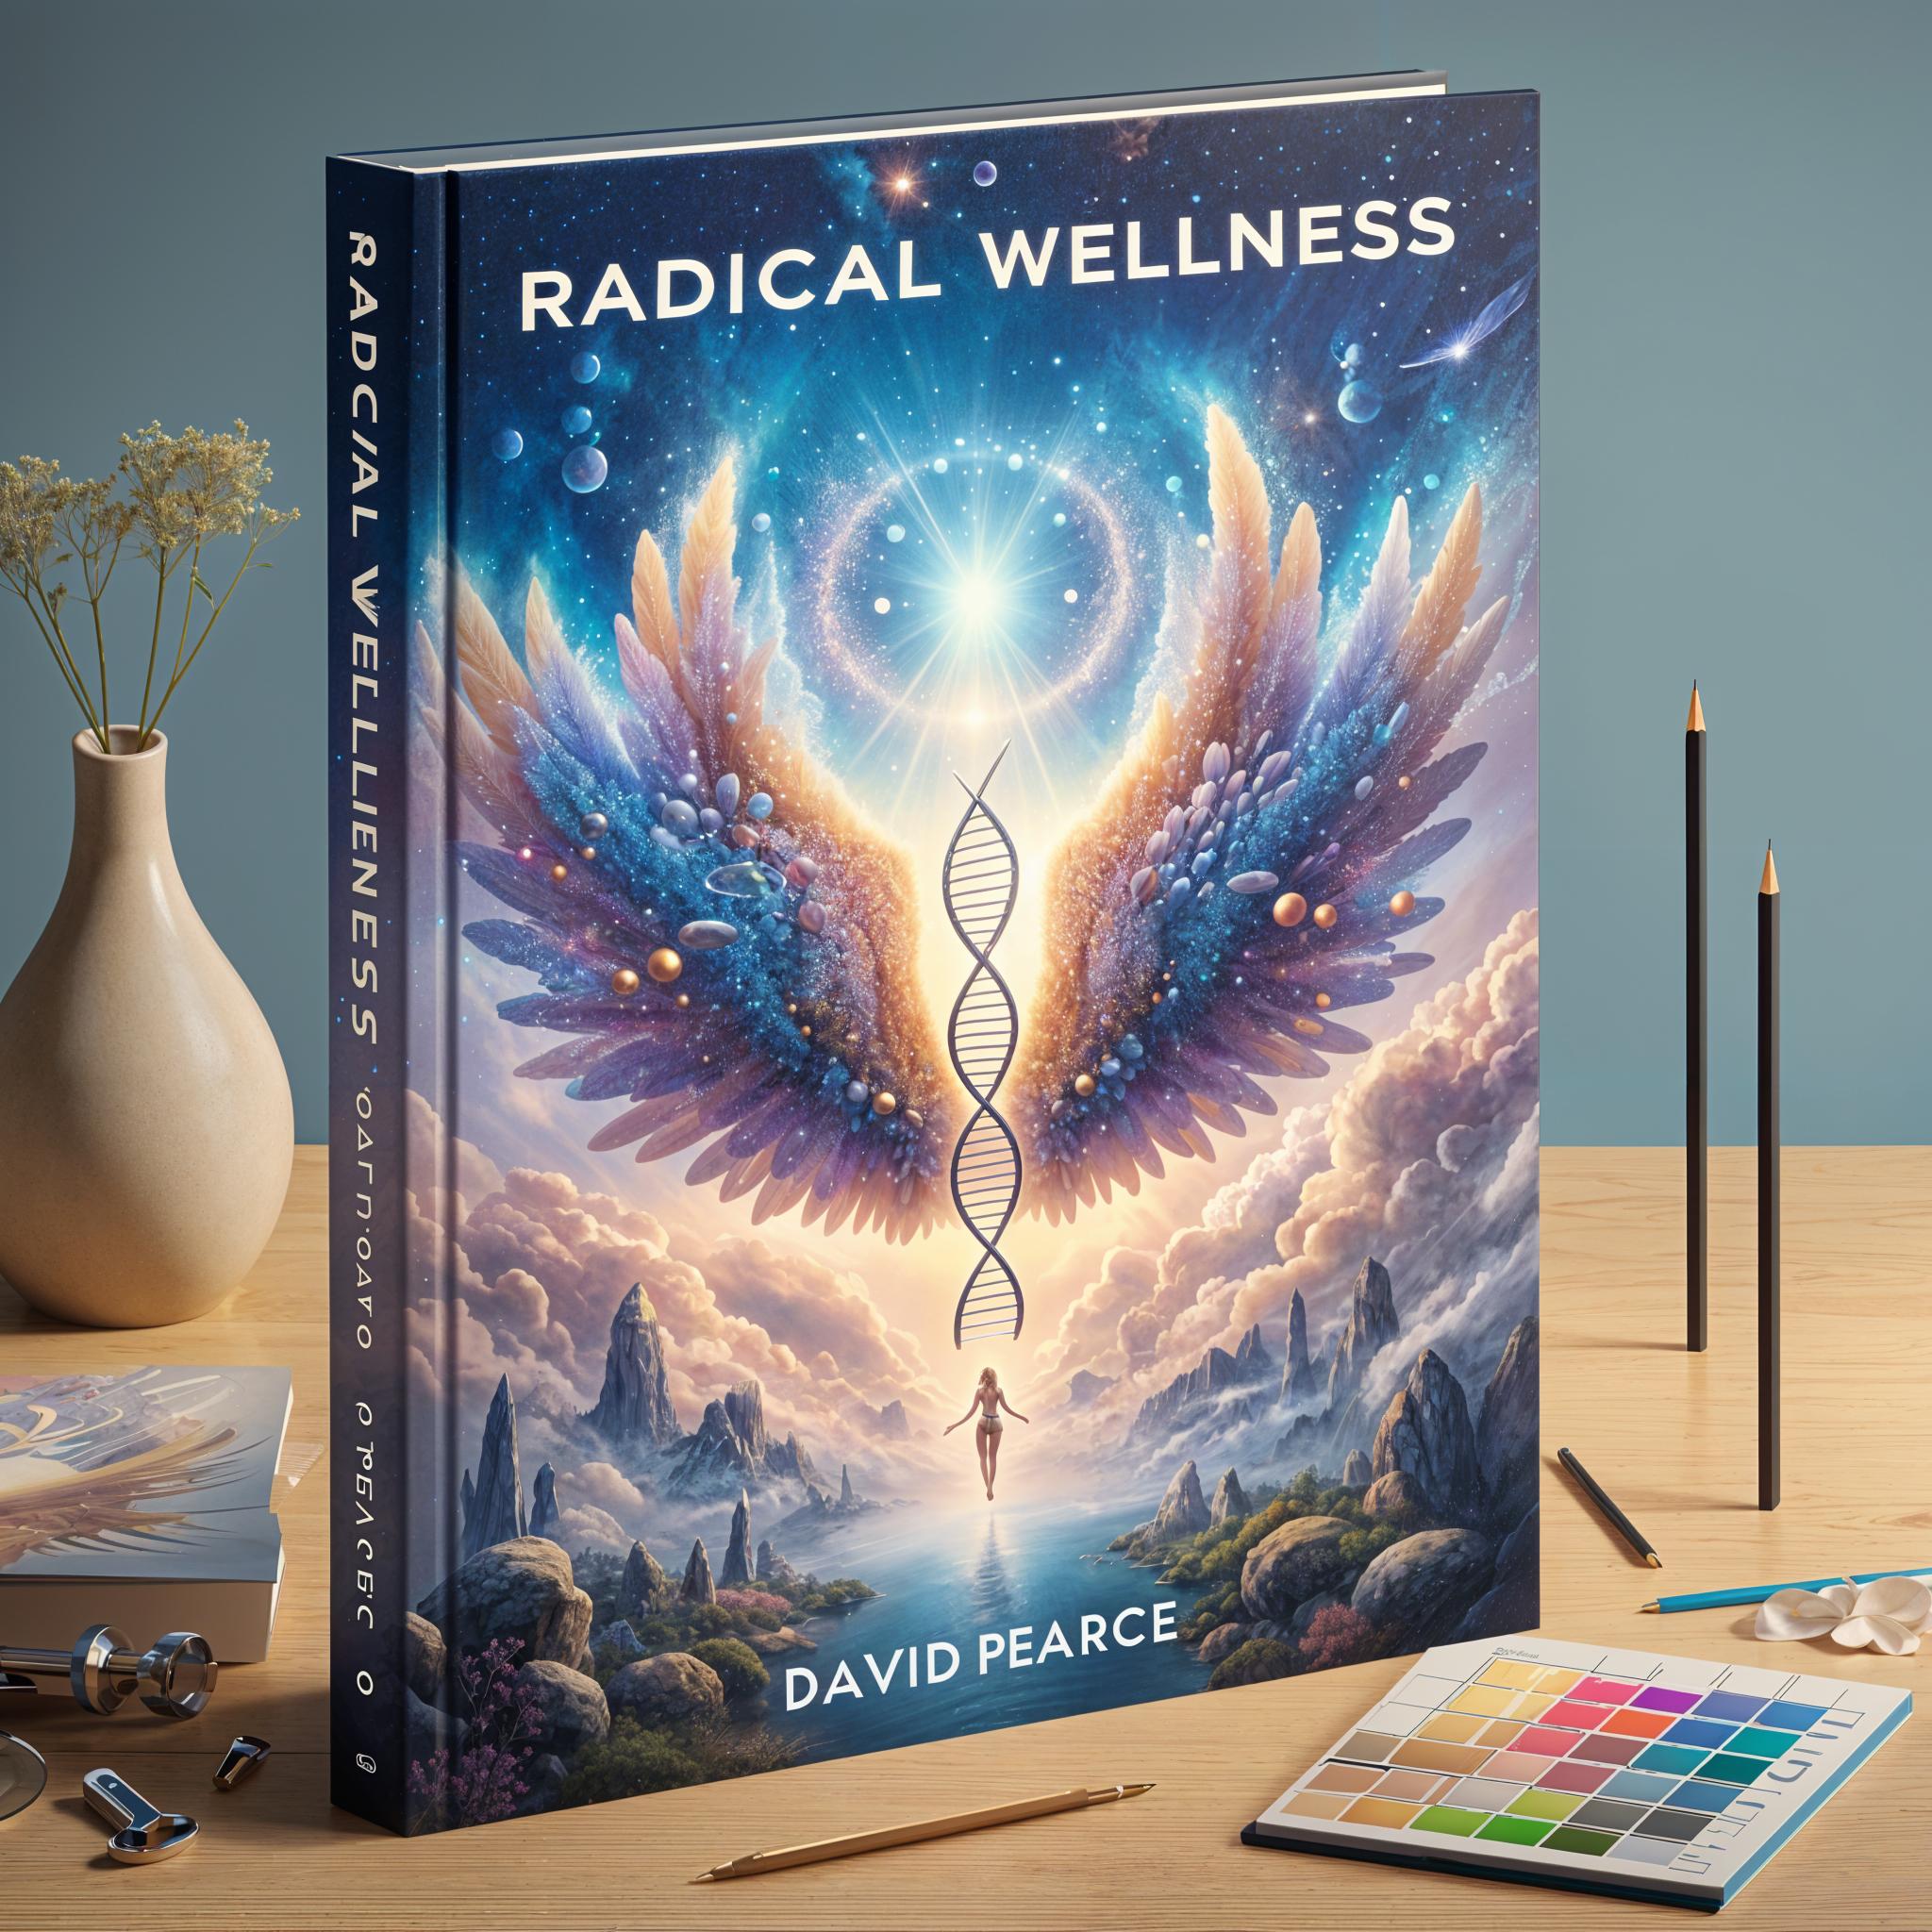 Radical Wellness by David Pearce